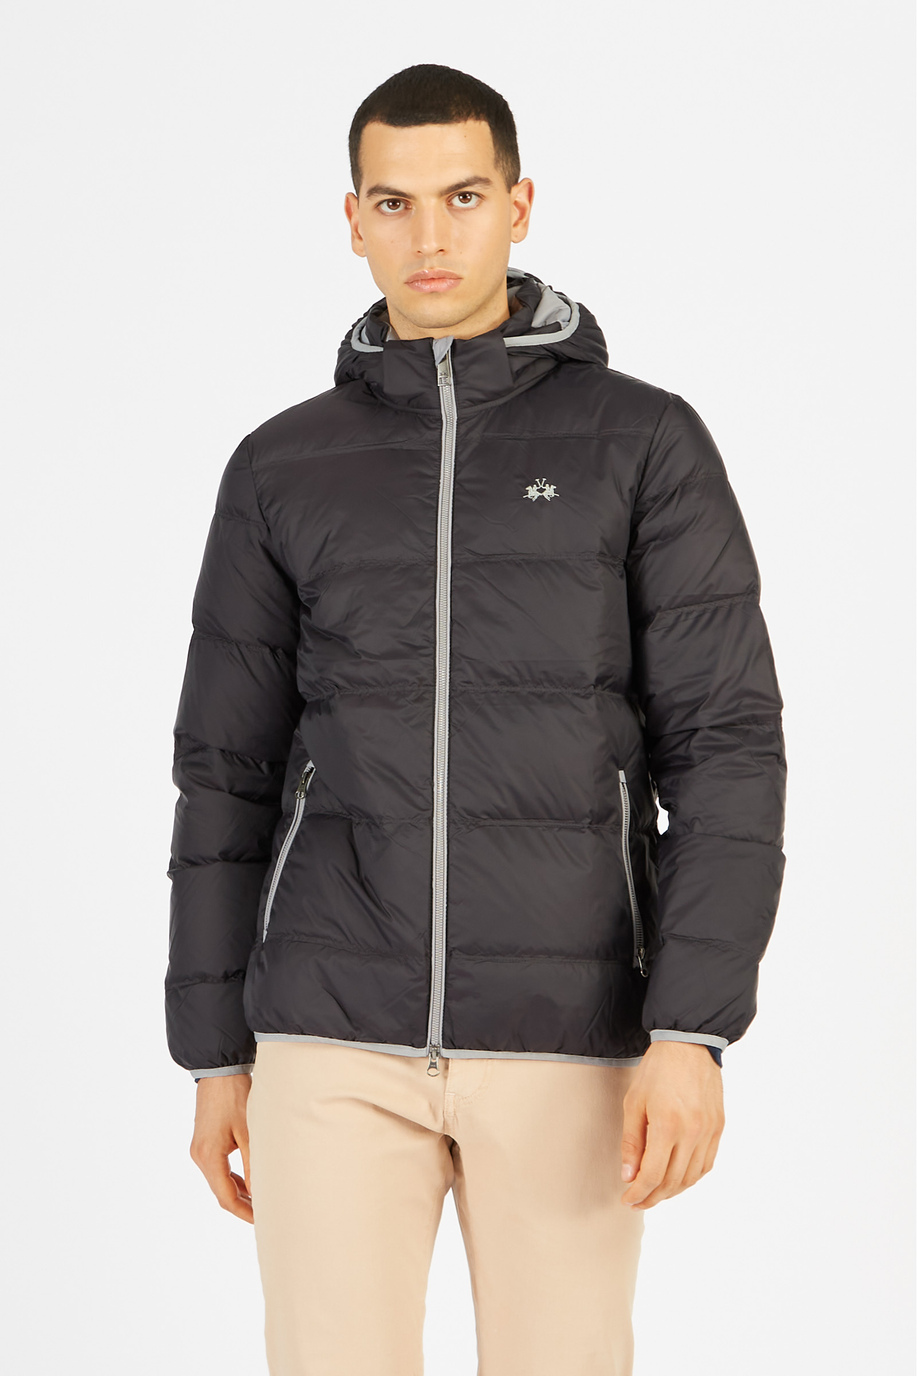 Men’s goose down jacket with regular fit zip closure - Outerwear | La Martina - Official Online Shop